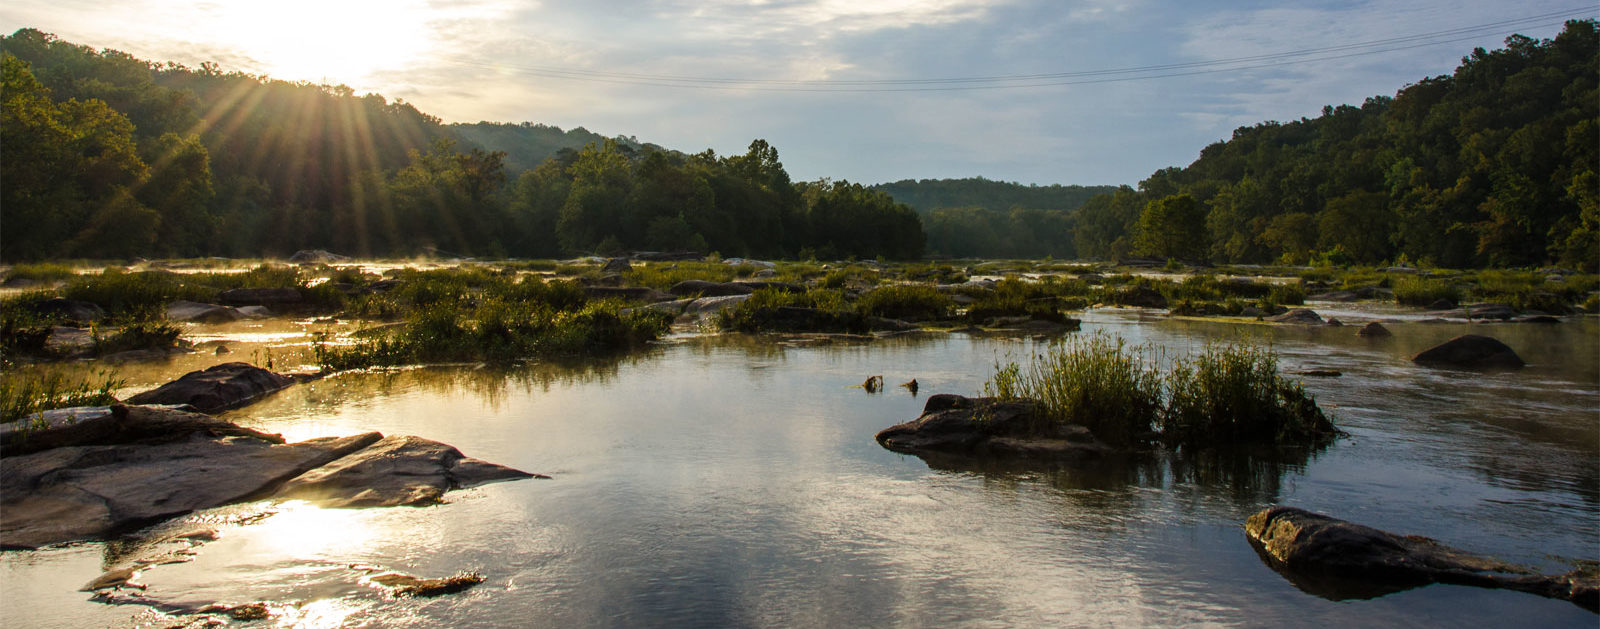 Confluence of the Rappahannock and Rapidan Rivers, Virginia